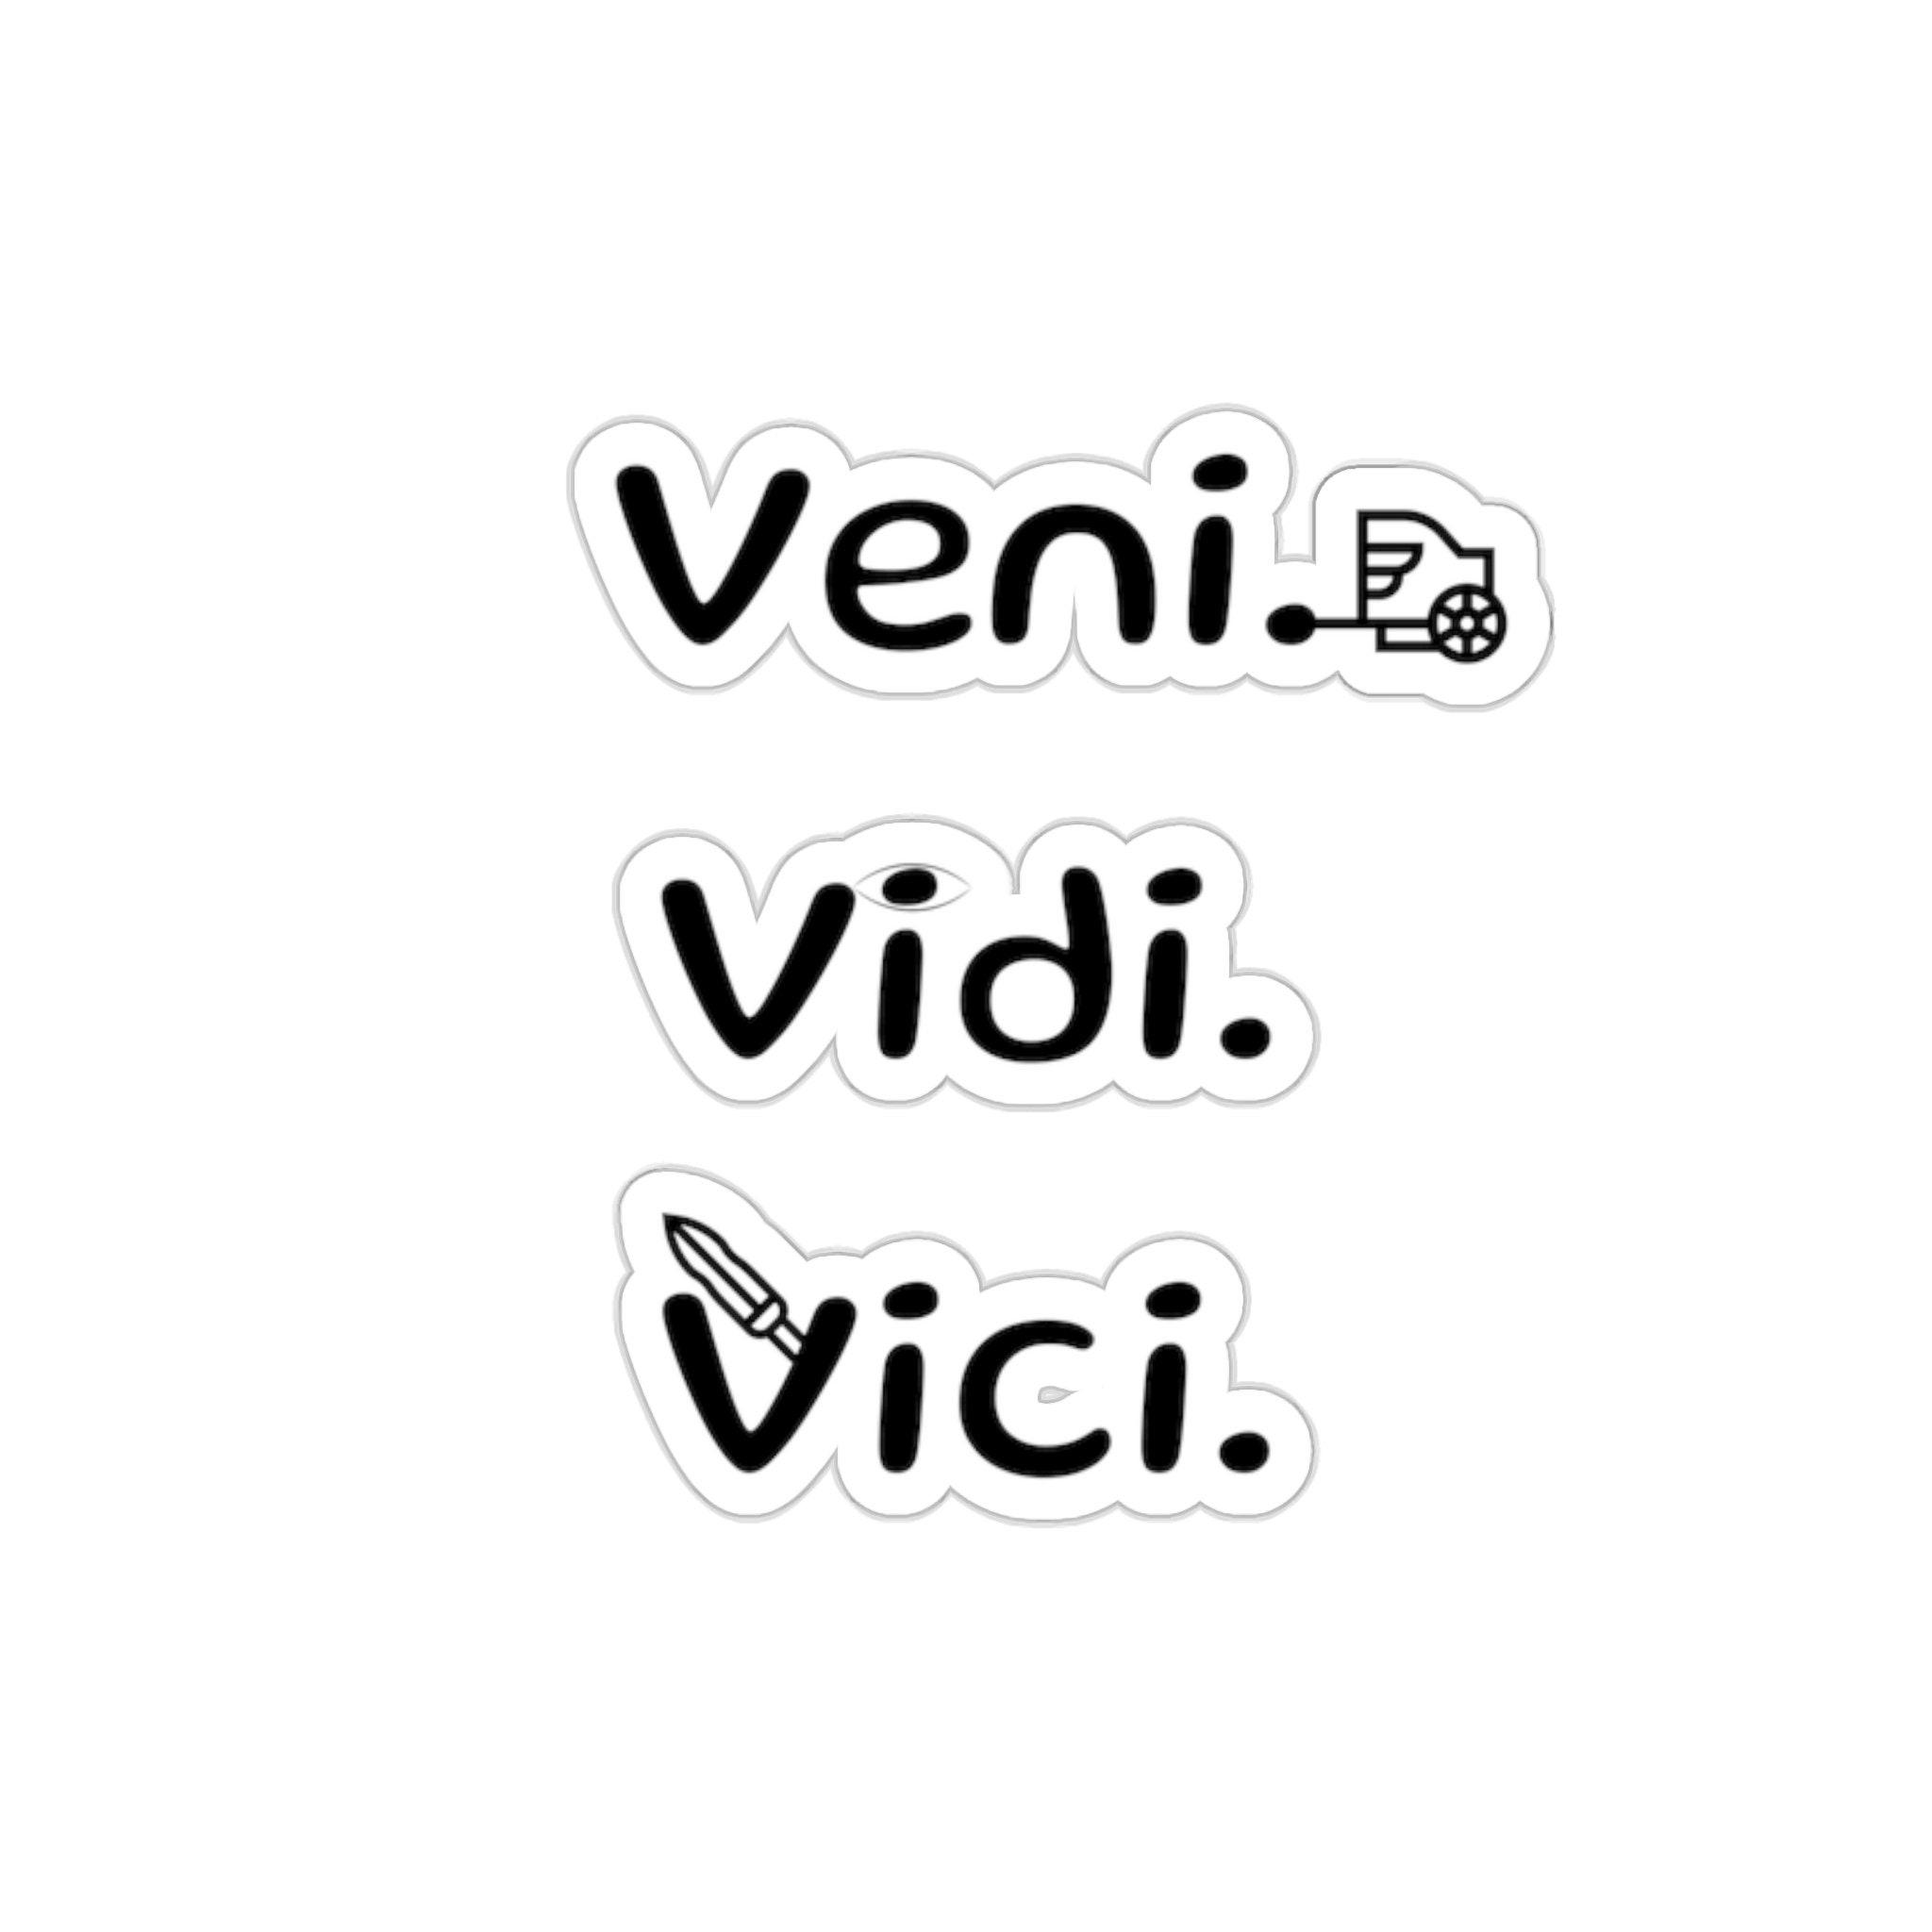 Veni Vidi Vici - Latin I Came I Saw I Conquered Victory Inspiration  Motivation Phrase Quote - Vector Type - SVG EPS PNG Digital Download